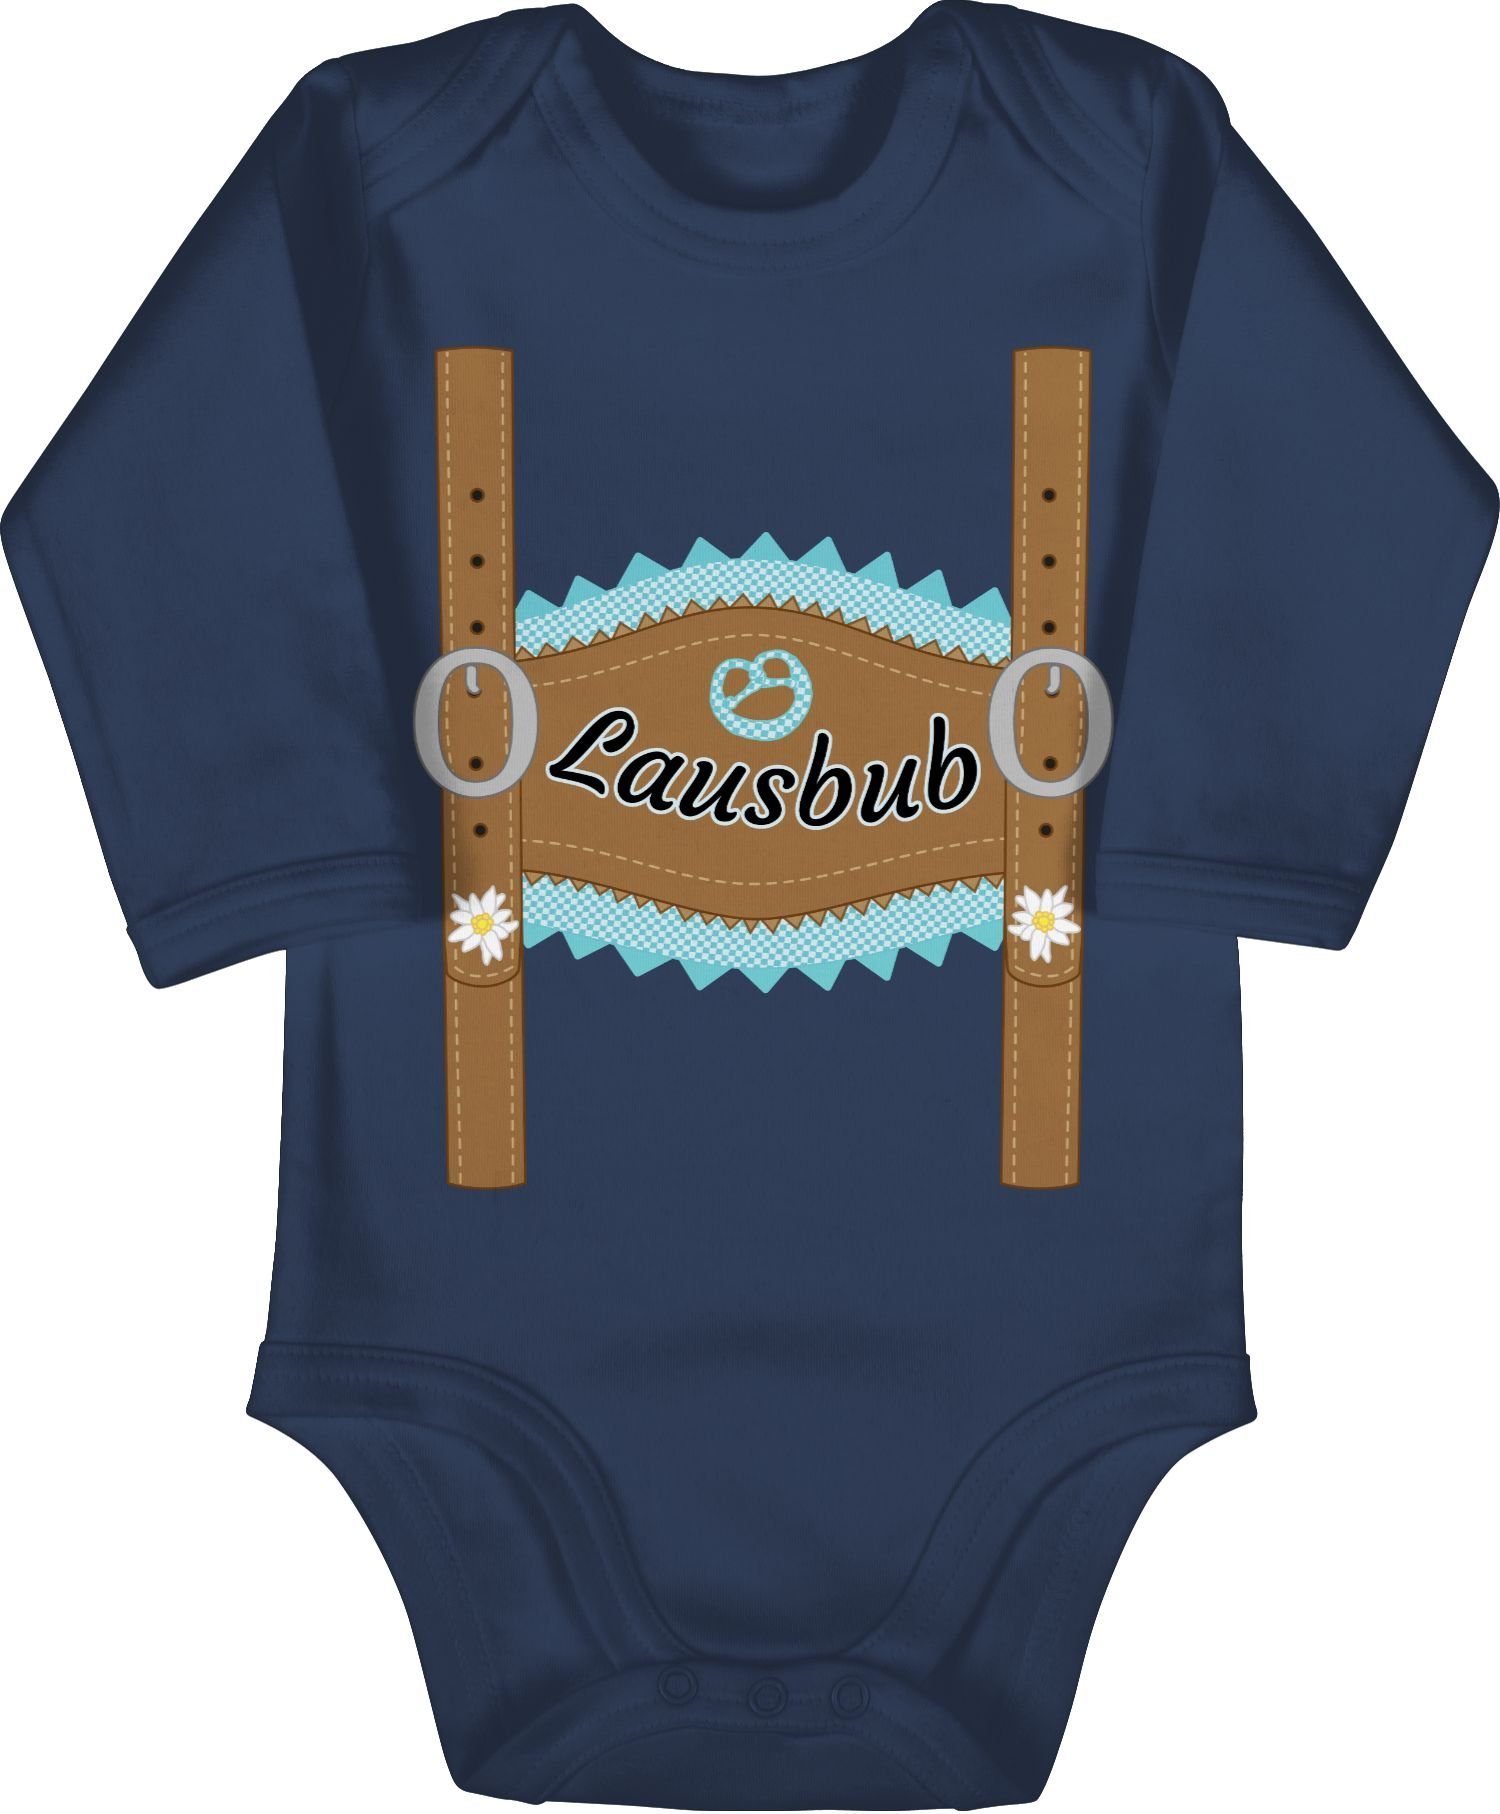 Shirtracer Shirtbody »Lausbub Lederhose - Mode für Oktoberfest Baby Outfit  - Bio Baby Strampler langarm« bayrischer strampler - babybody lederhose -  lederhosen body - lausbub